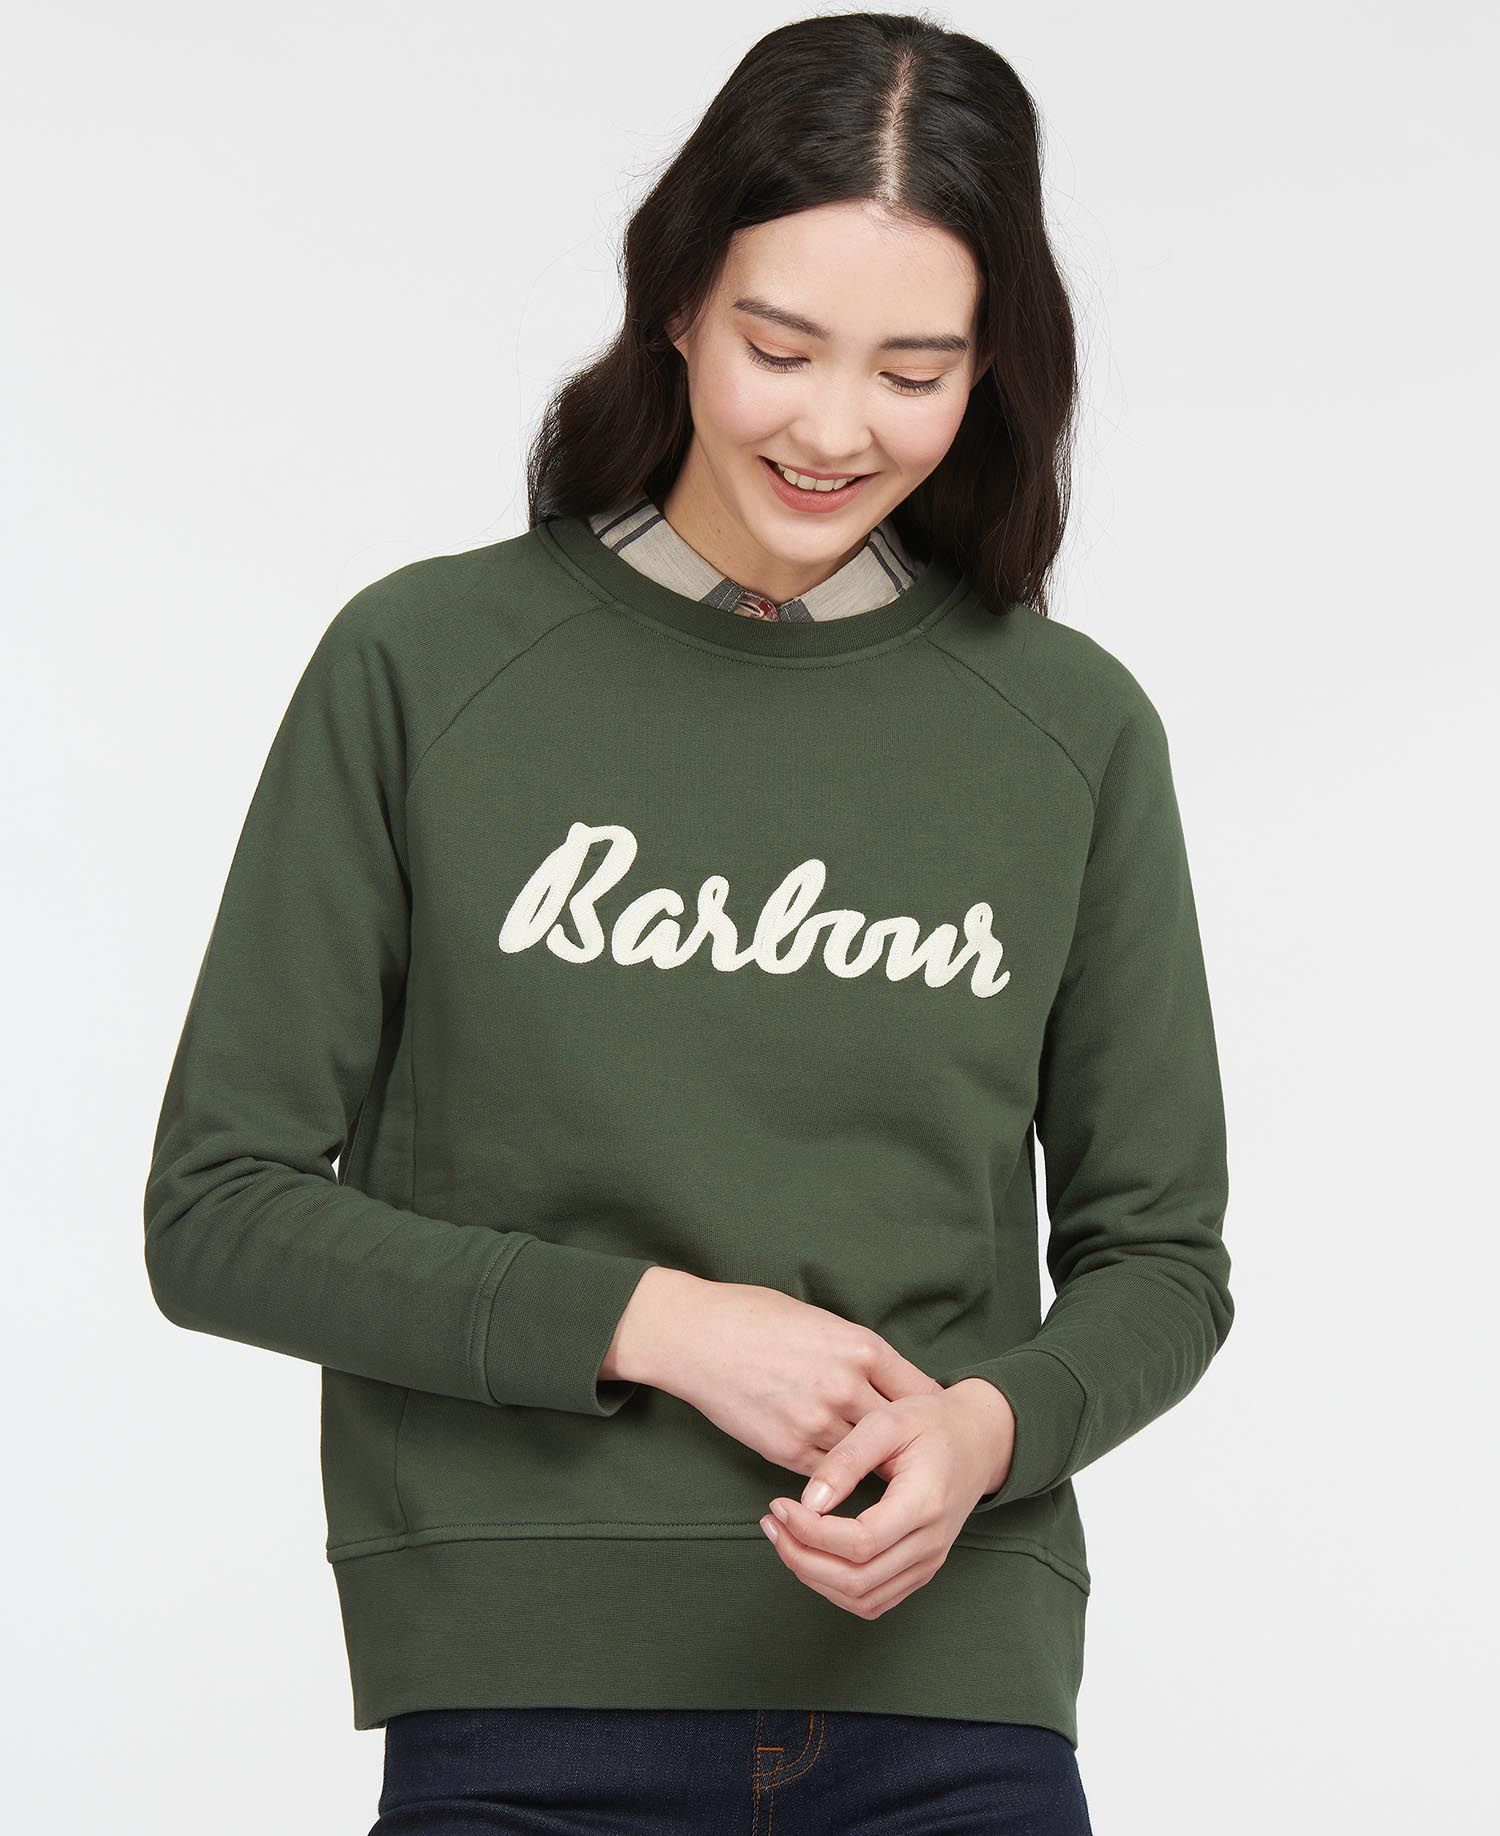 Women's Otterburn Overlayer Sweatshirt - Olive